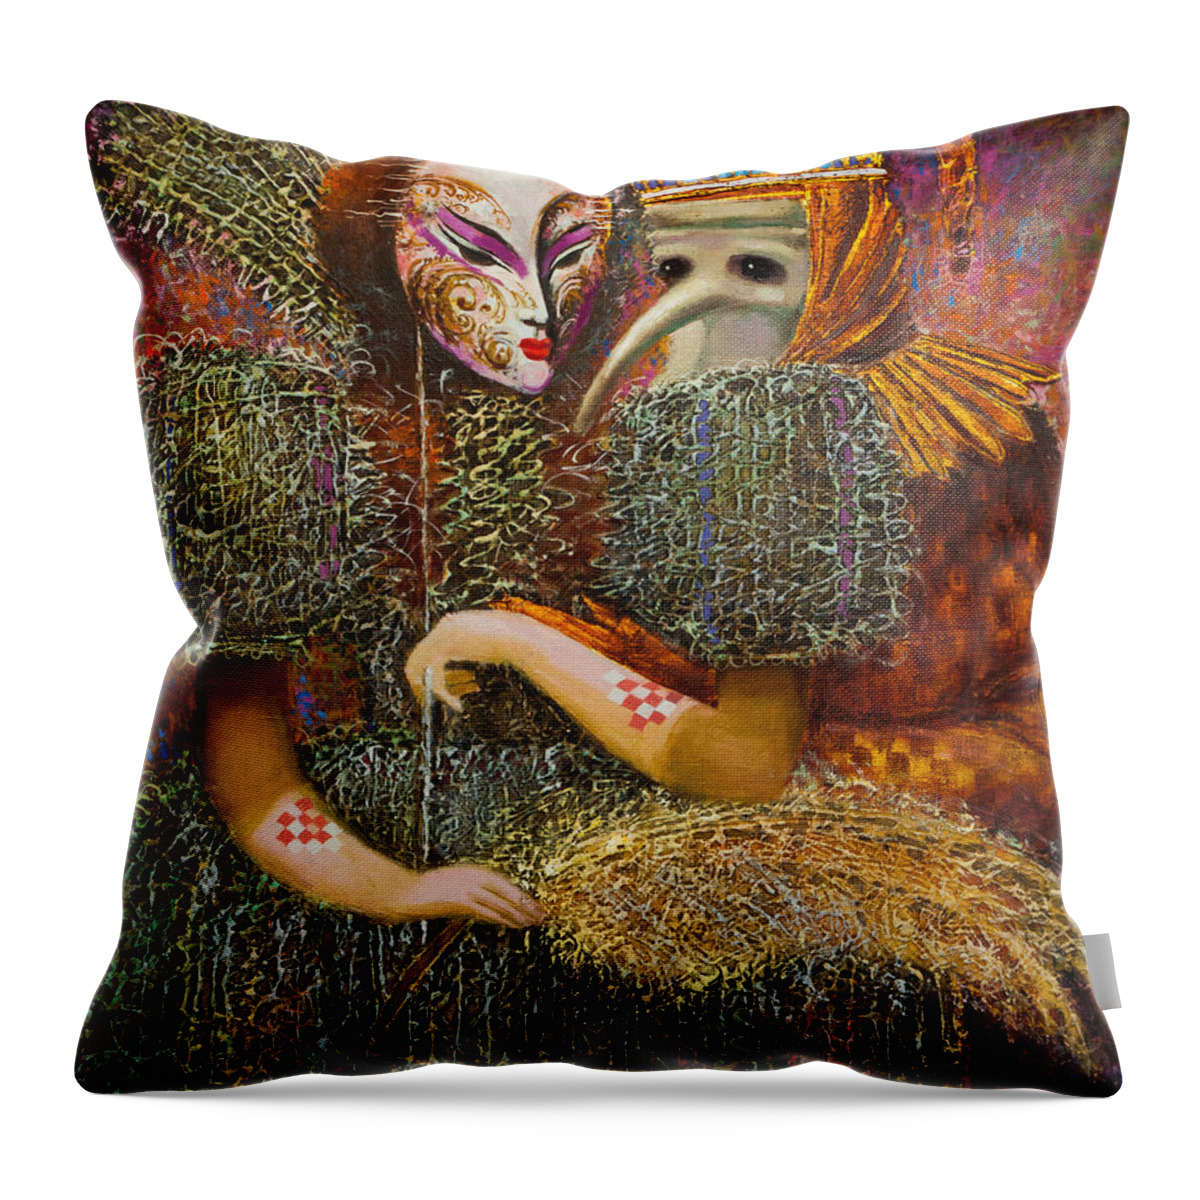 Venetian Mask Throw Pillow featuring the painting Venetian Masks by Valentina Kondrashova